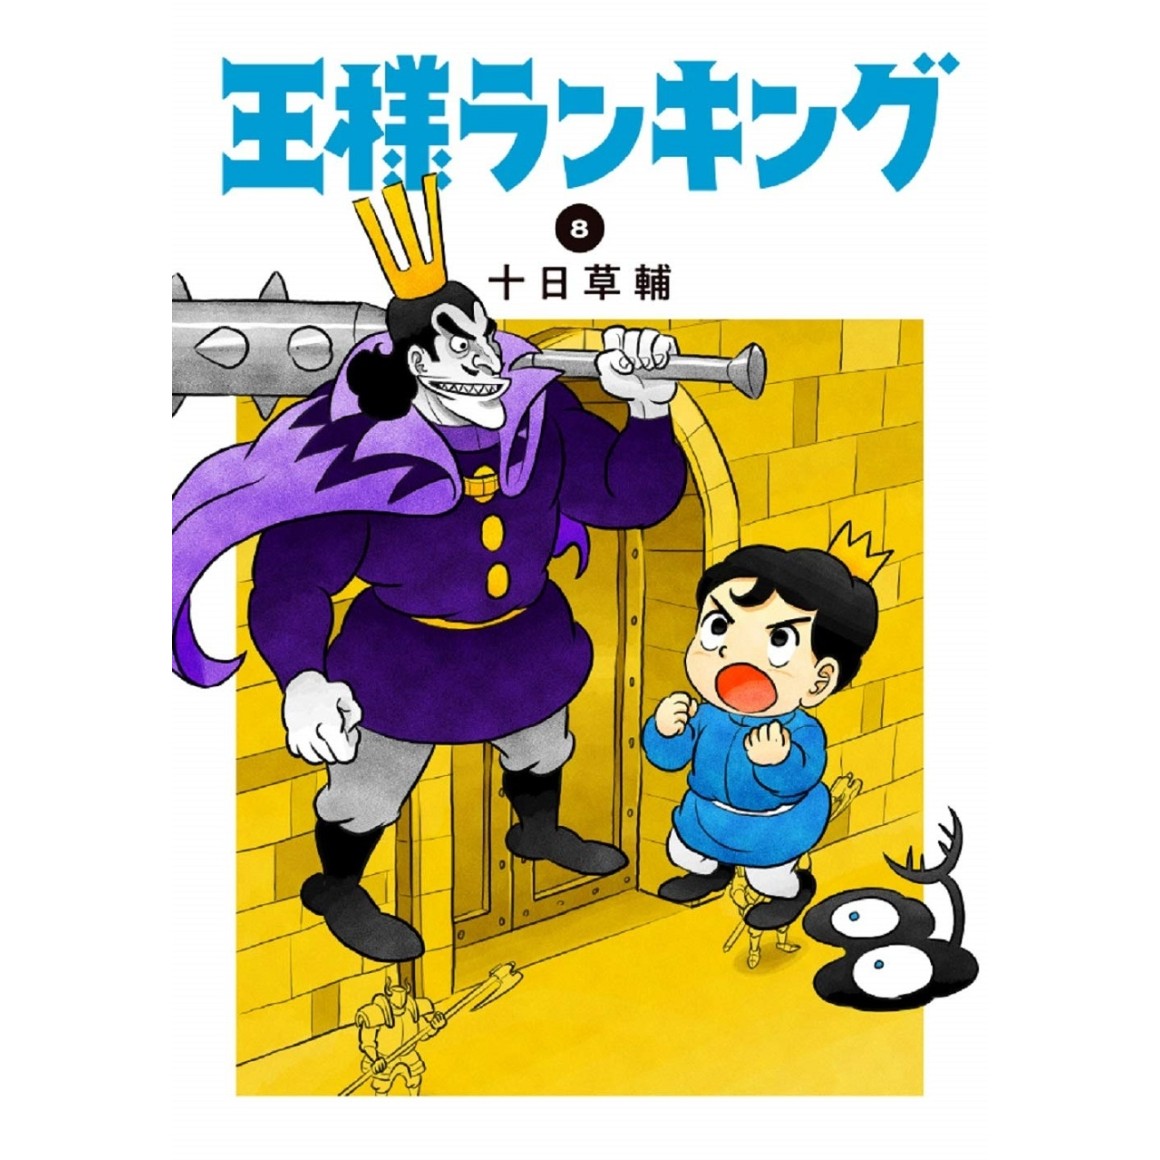 Ousama Ranking Manga  Manga, Anime, Character design